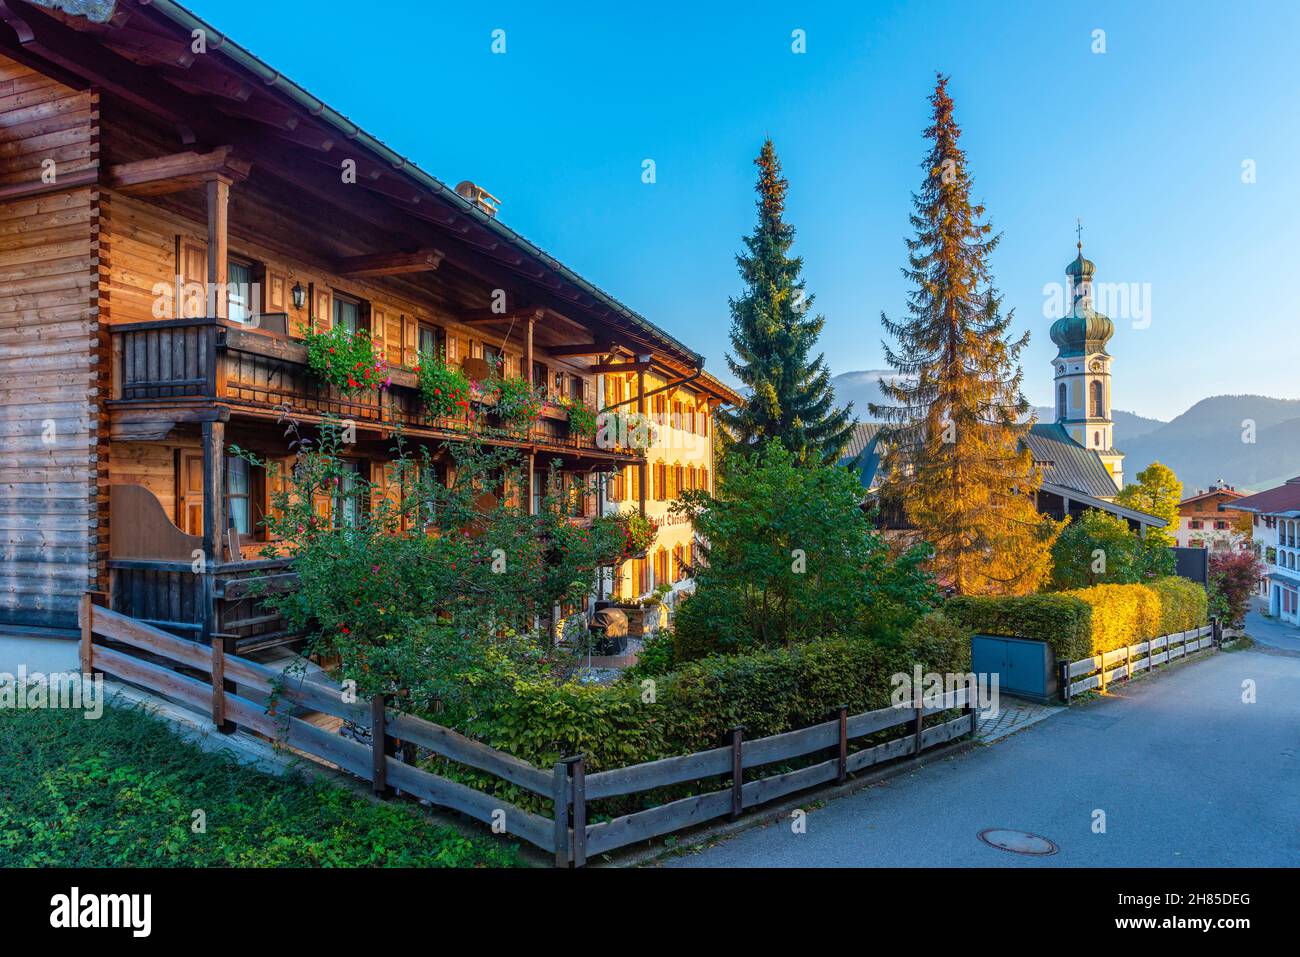 Reit im Winkl, Chiemgau region, Upper Bavaria, Bavarian Alps, Southern Germany, Europe Stock Photo